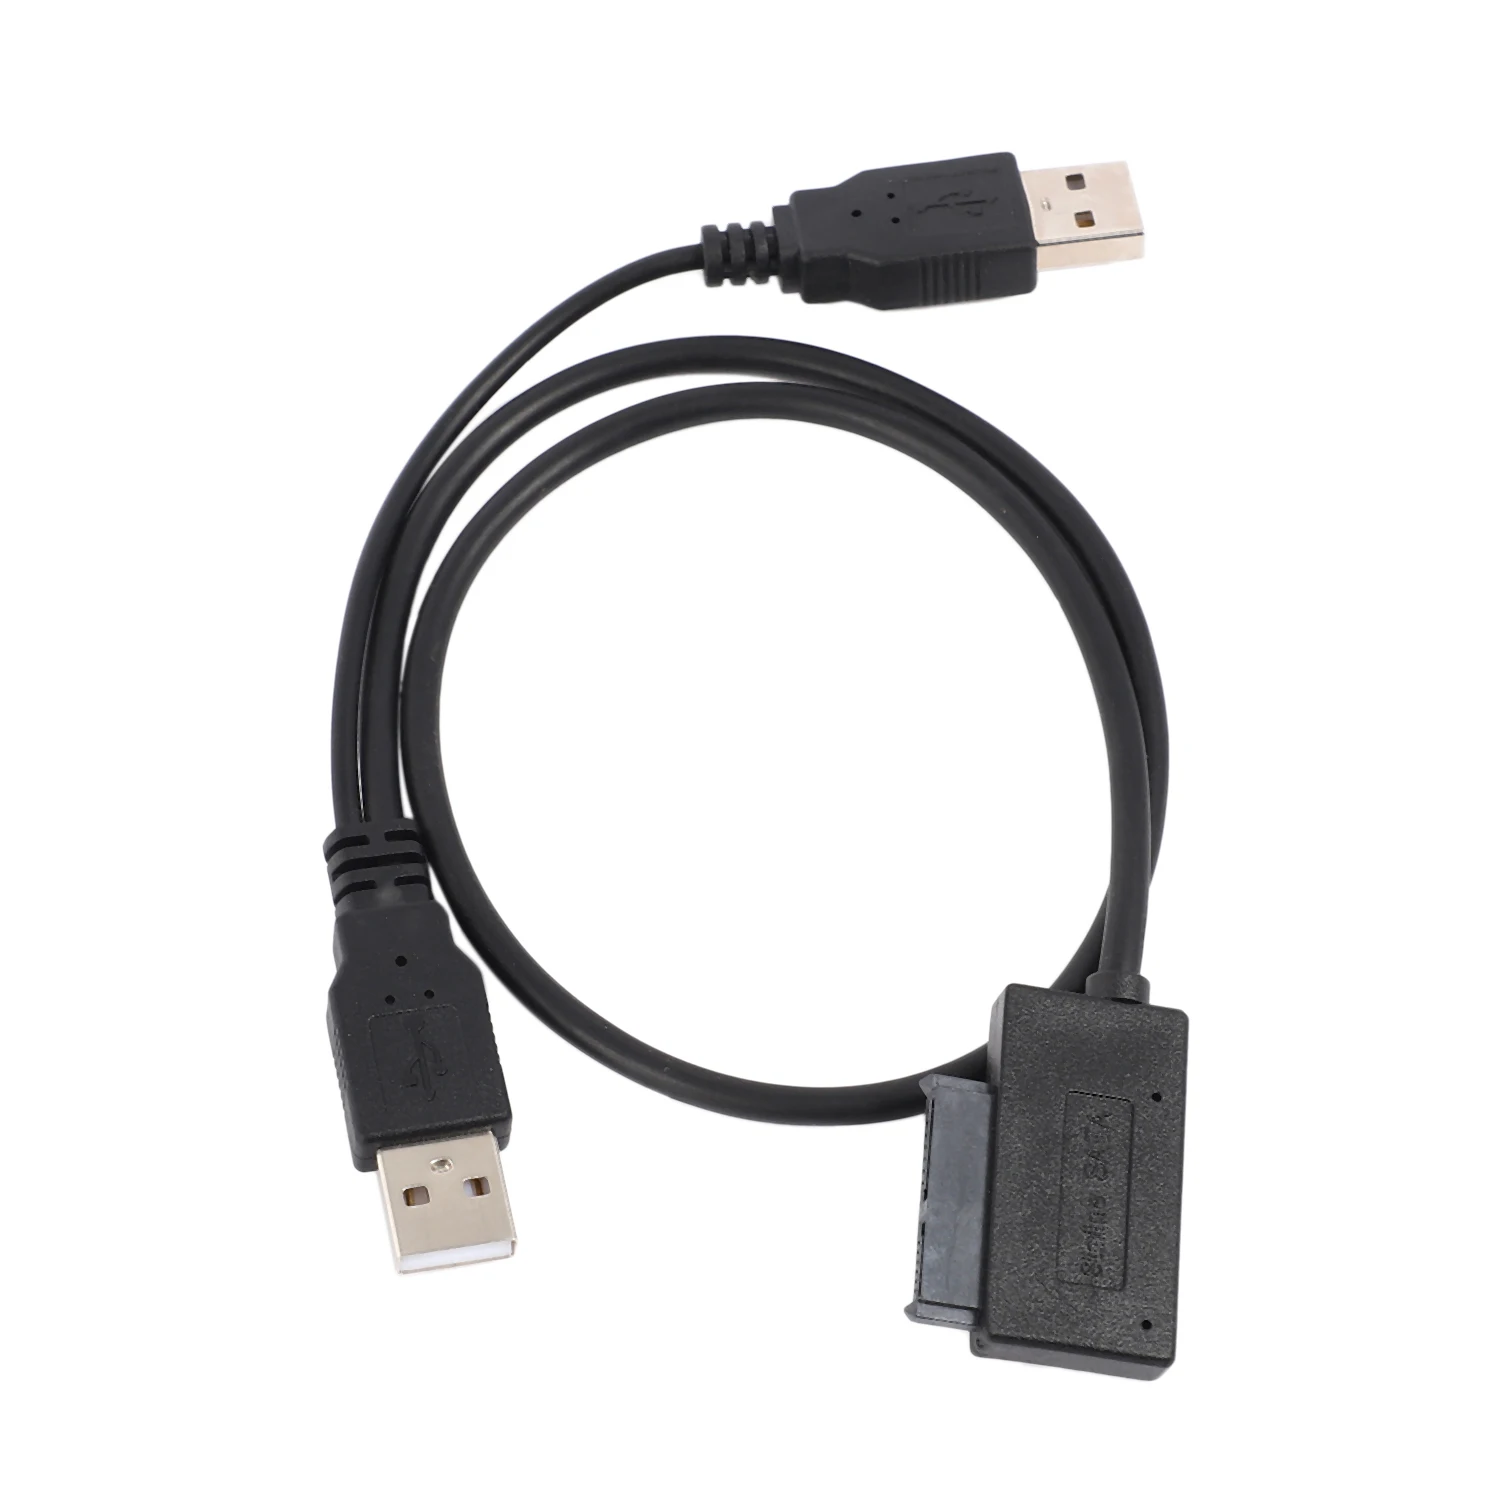 

Тонкий Sata-кабель Usb2.0 на 6 + 7 13Pin с внешним источником питания Usb2.0 для ноутбука, компакт-диск, Dvd-Rom, адаптер, конвертер